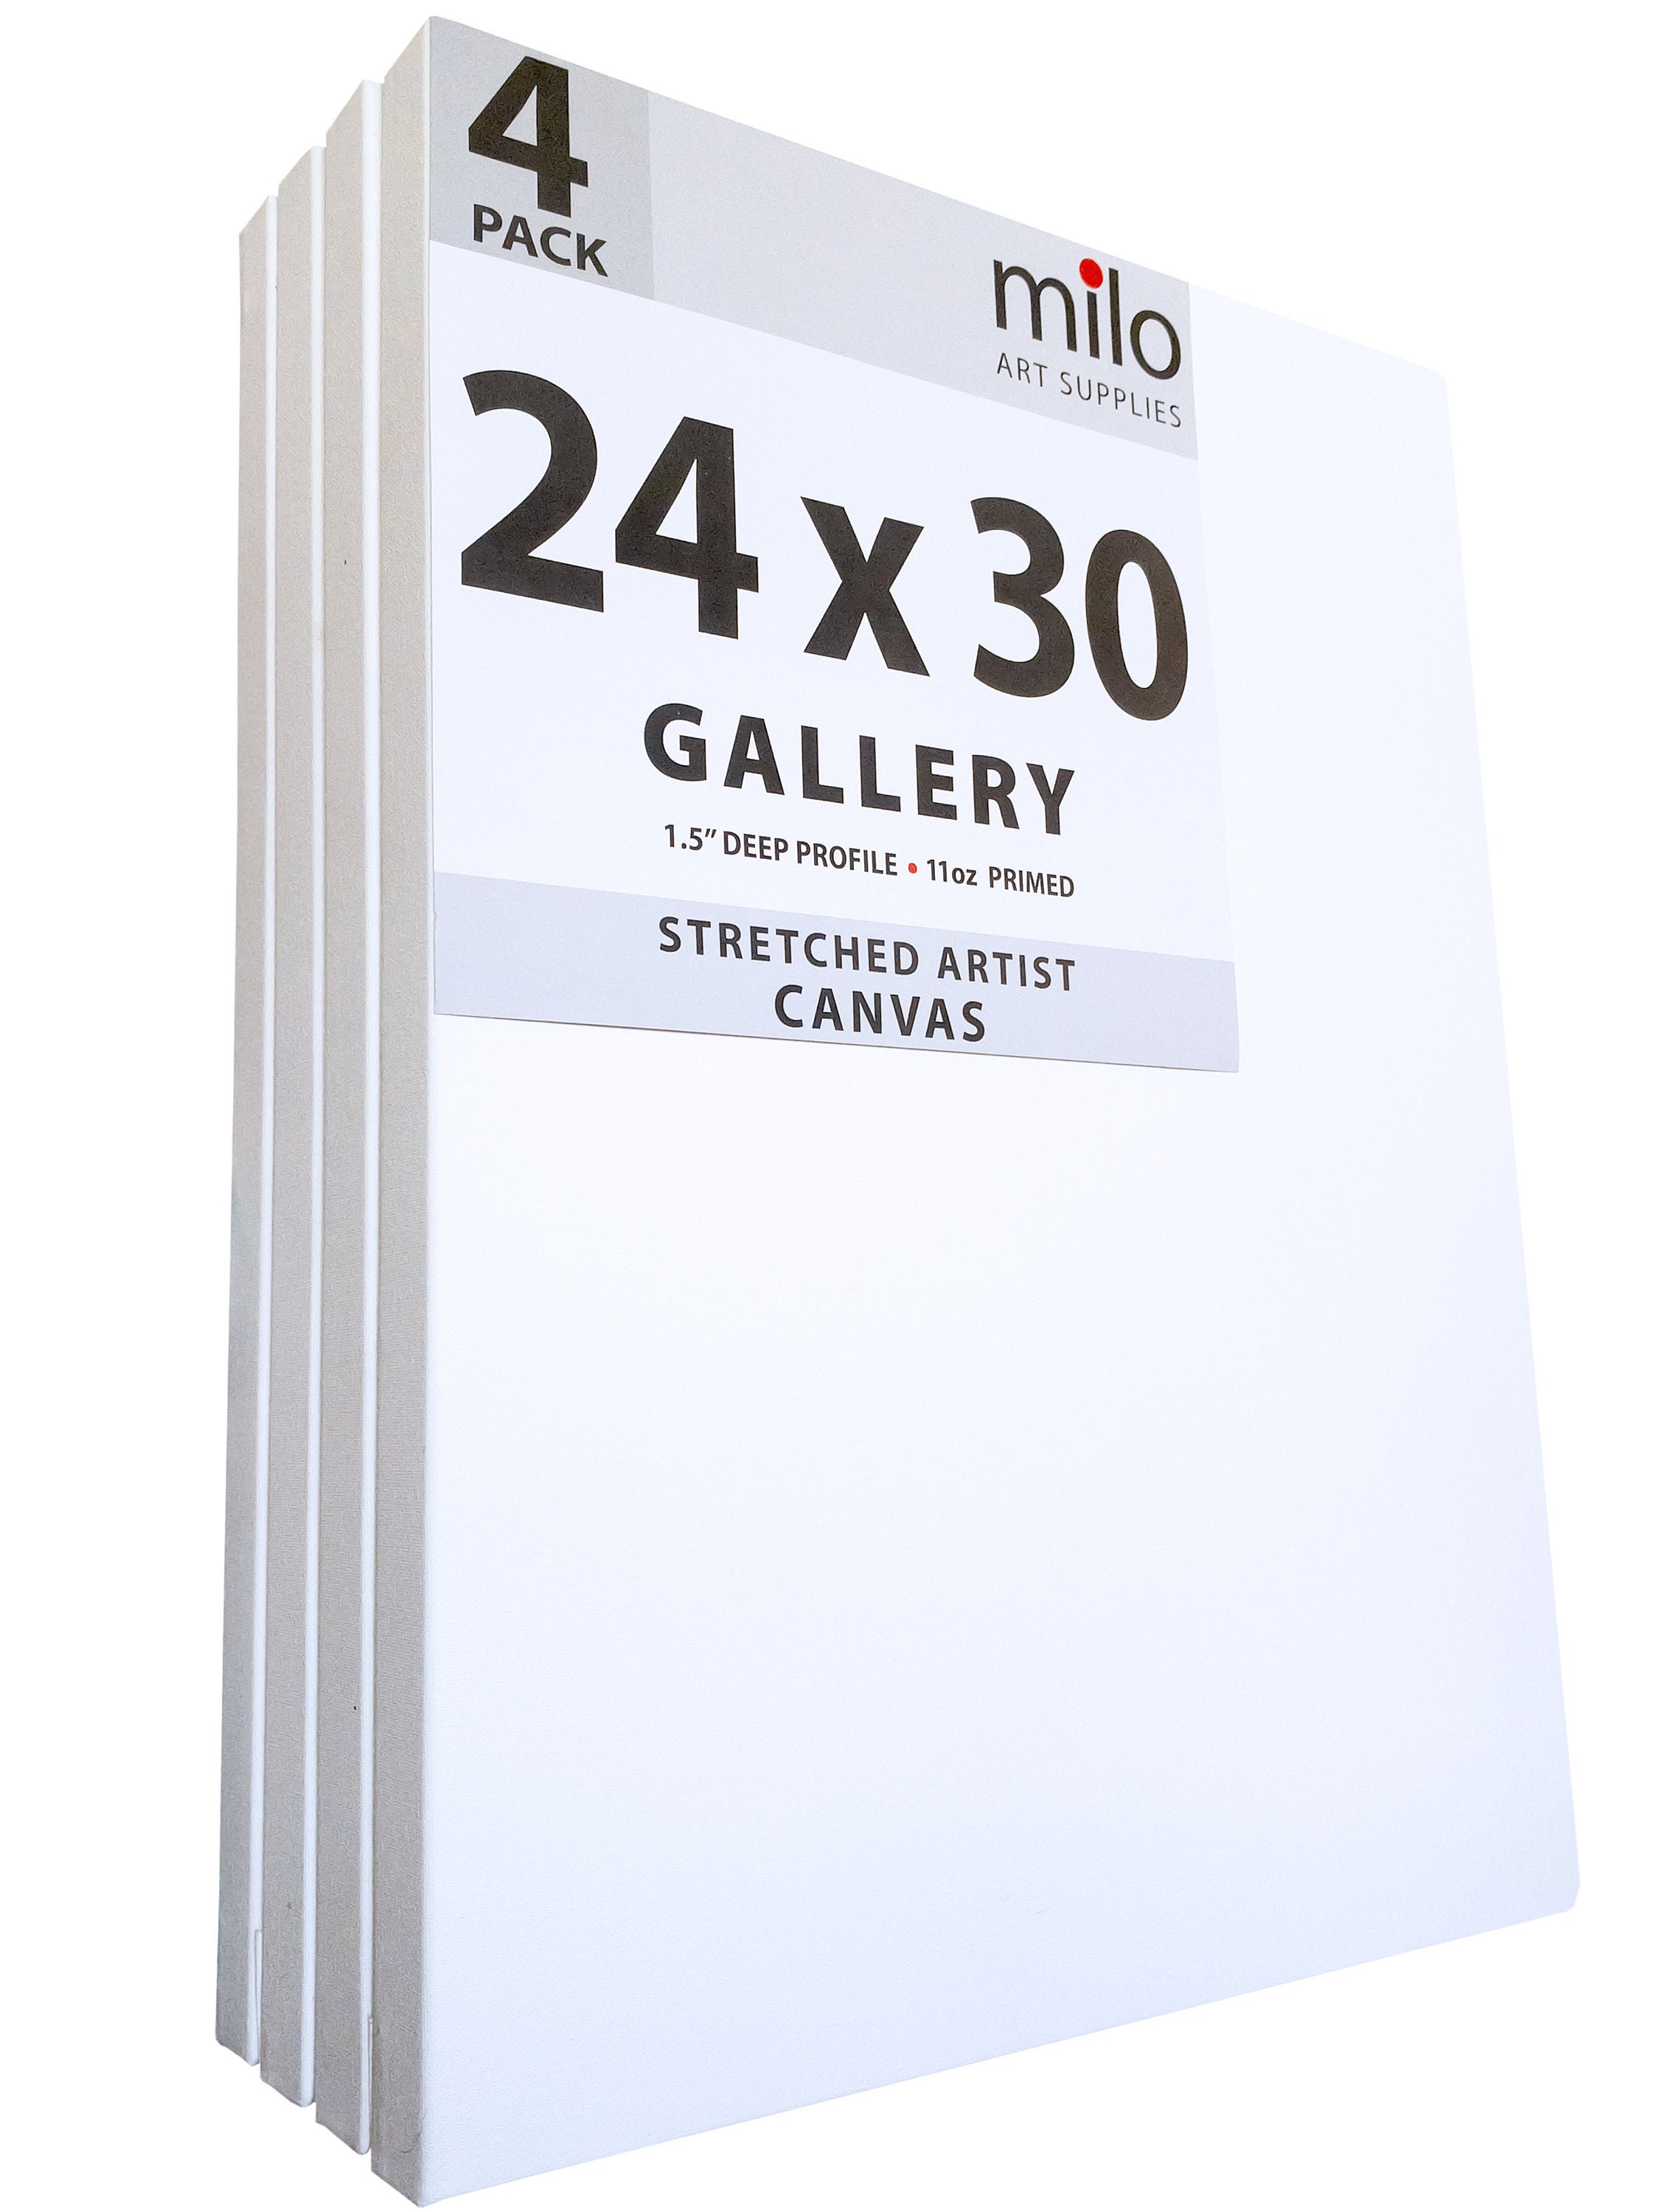 Milo Fluorescent Acrylic Paint 4 oz Bottles Set of 6 – Milo Art Supplies